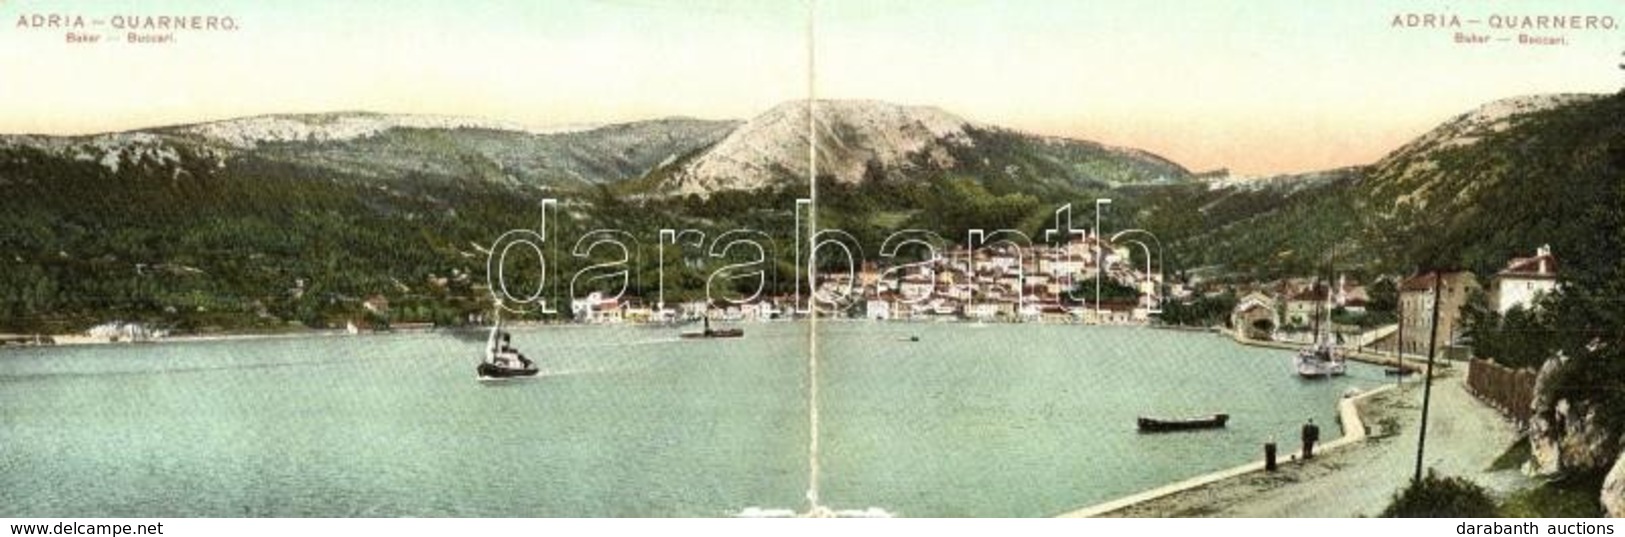 T2 1908 Bakar, Bukar, Buccari; Adria-Quarnero. Panoramacard. Ed. Feitzinger's Kunstverlag Nr. 69. II.b. - Sin Clasificación